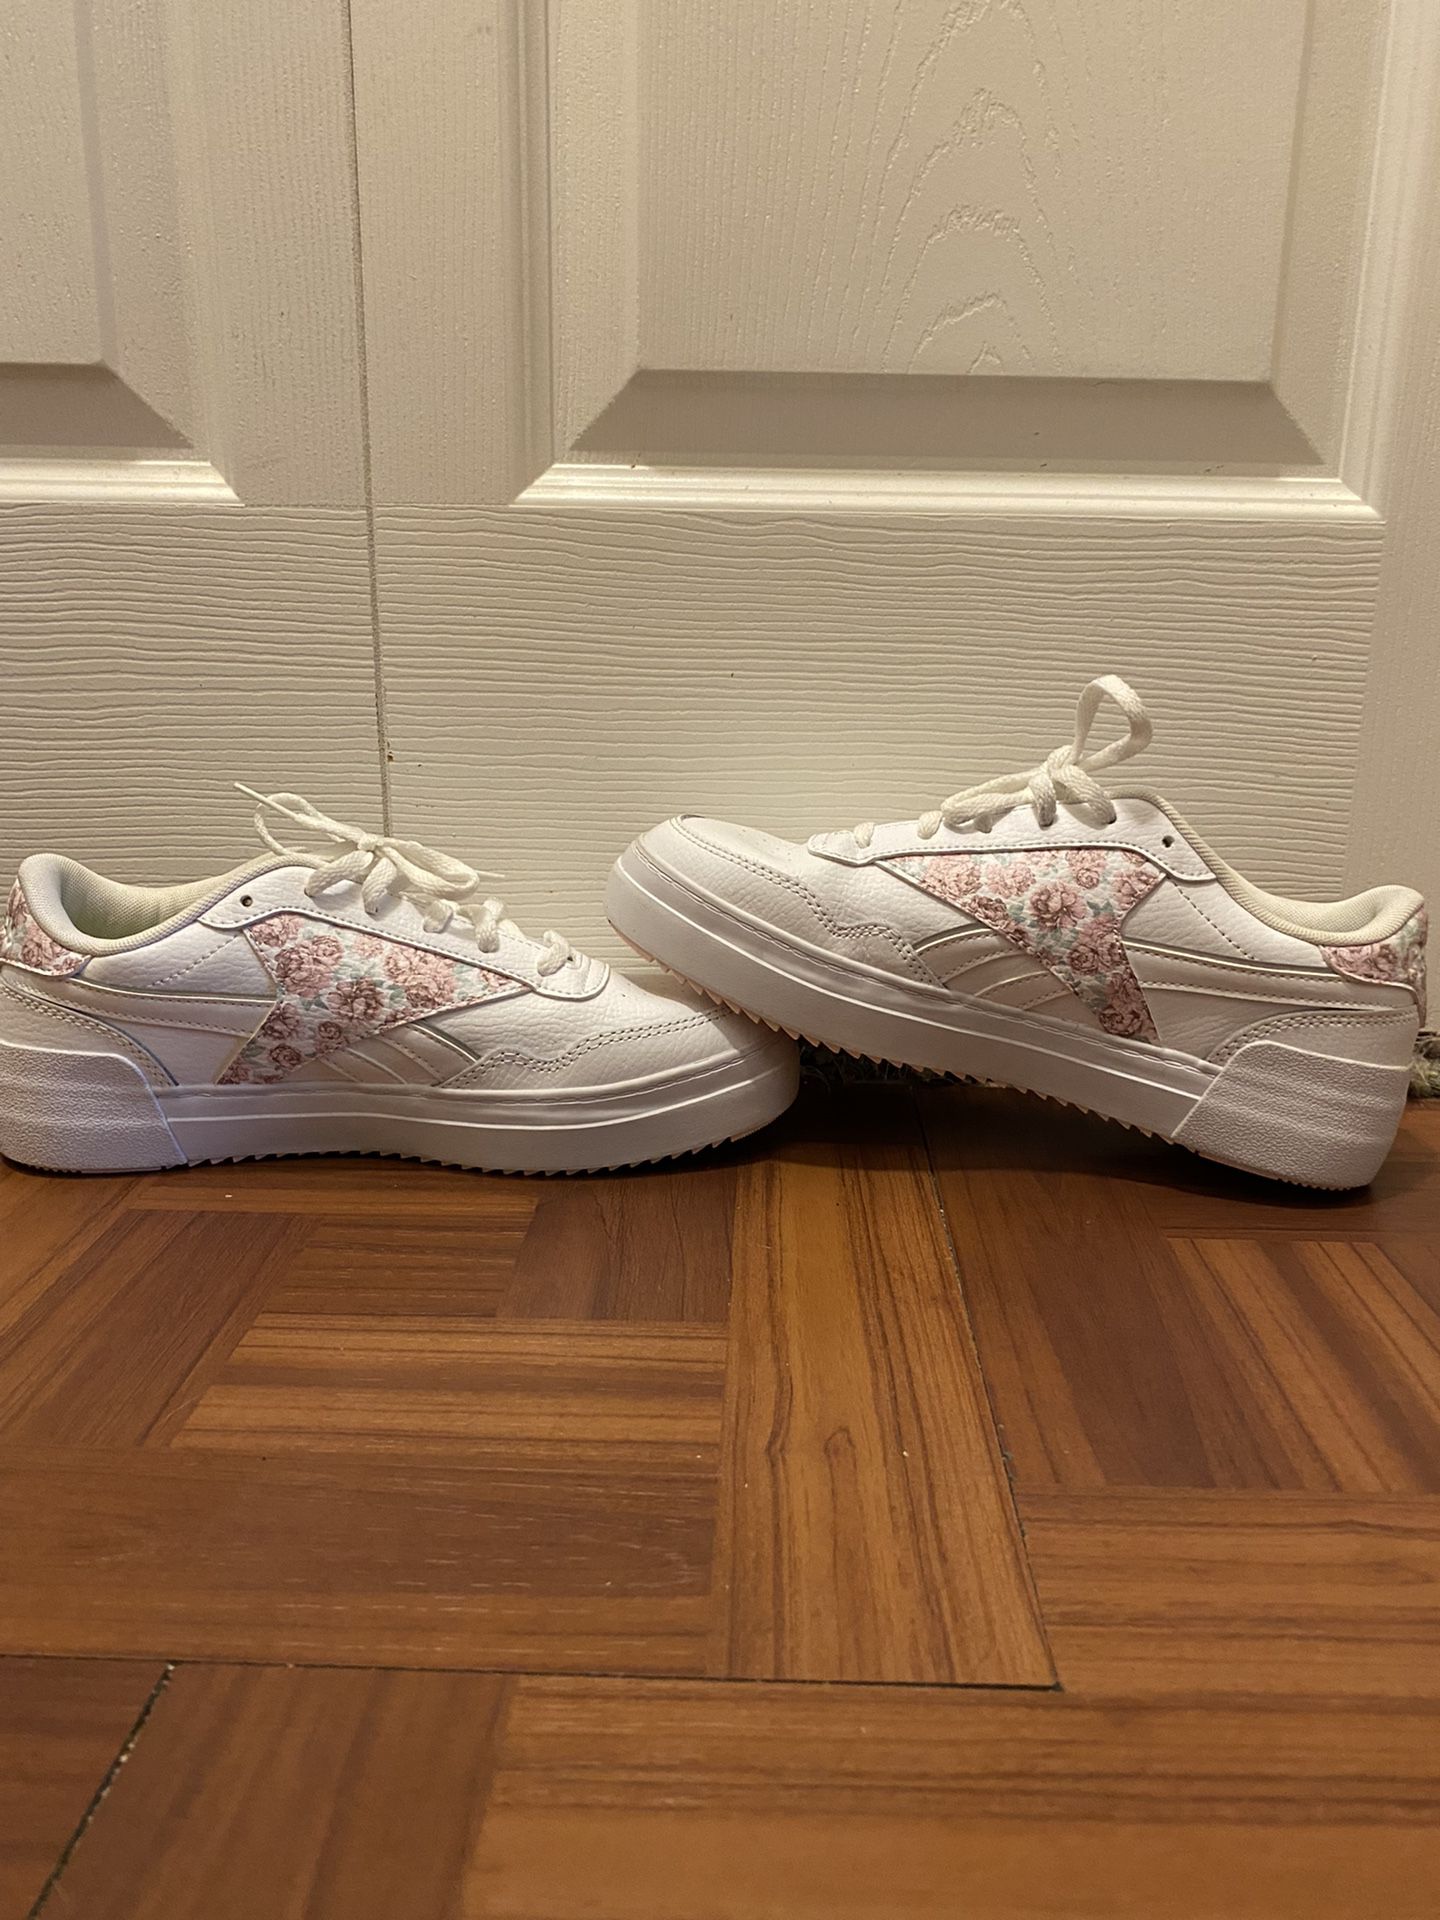 Reebok Sneakers White & Floral, Size 8